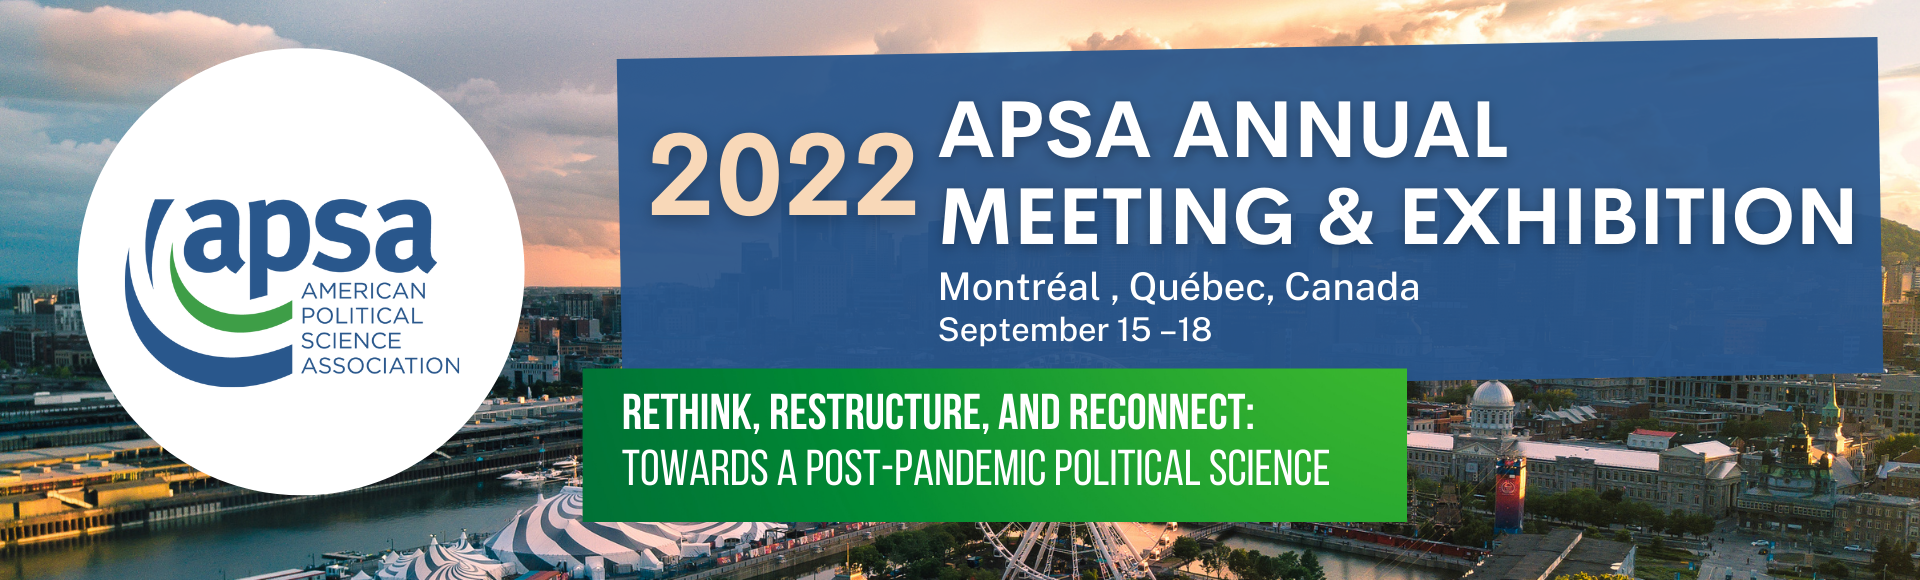 2022 APSA Annual Meeting & Exhibition